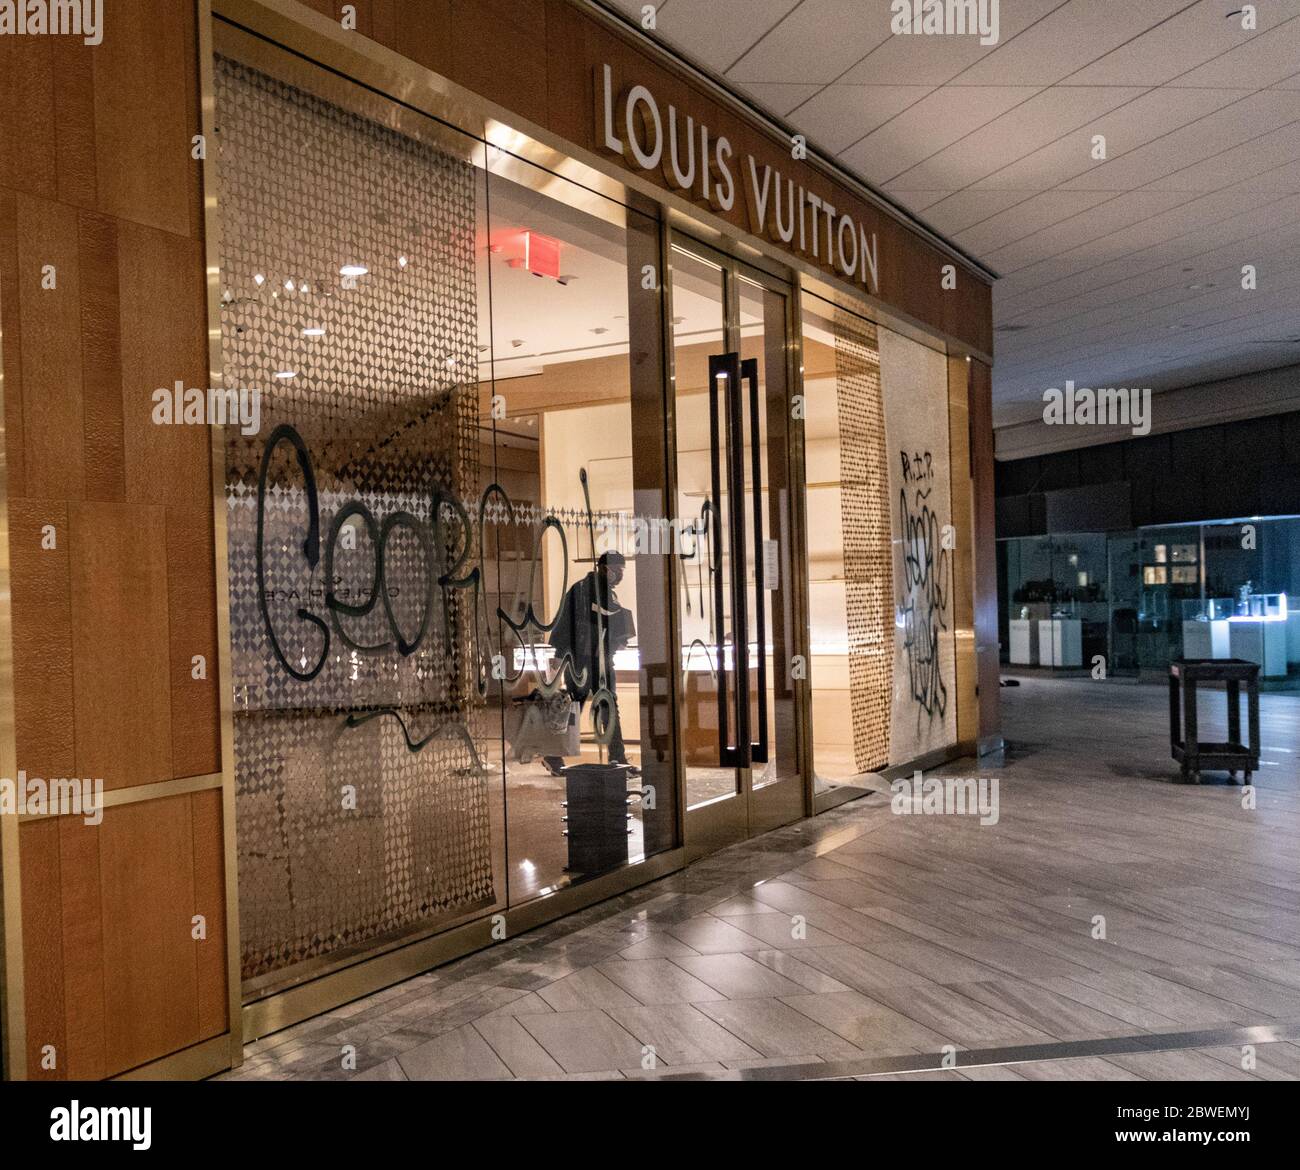 Louis Vuitton Store In Copley Mall Boston